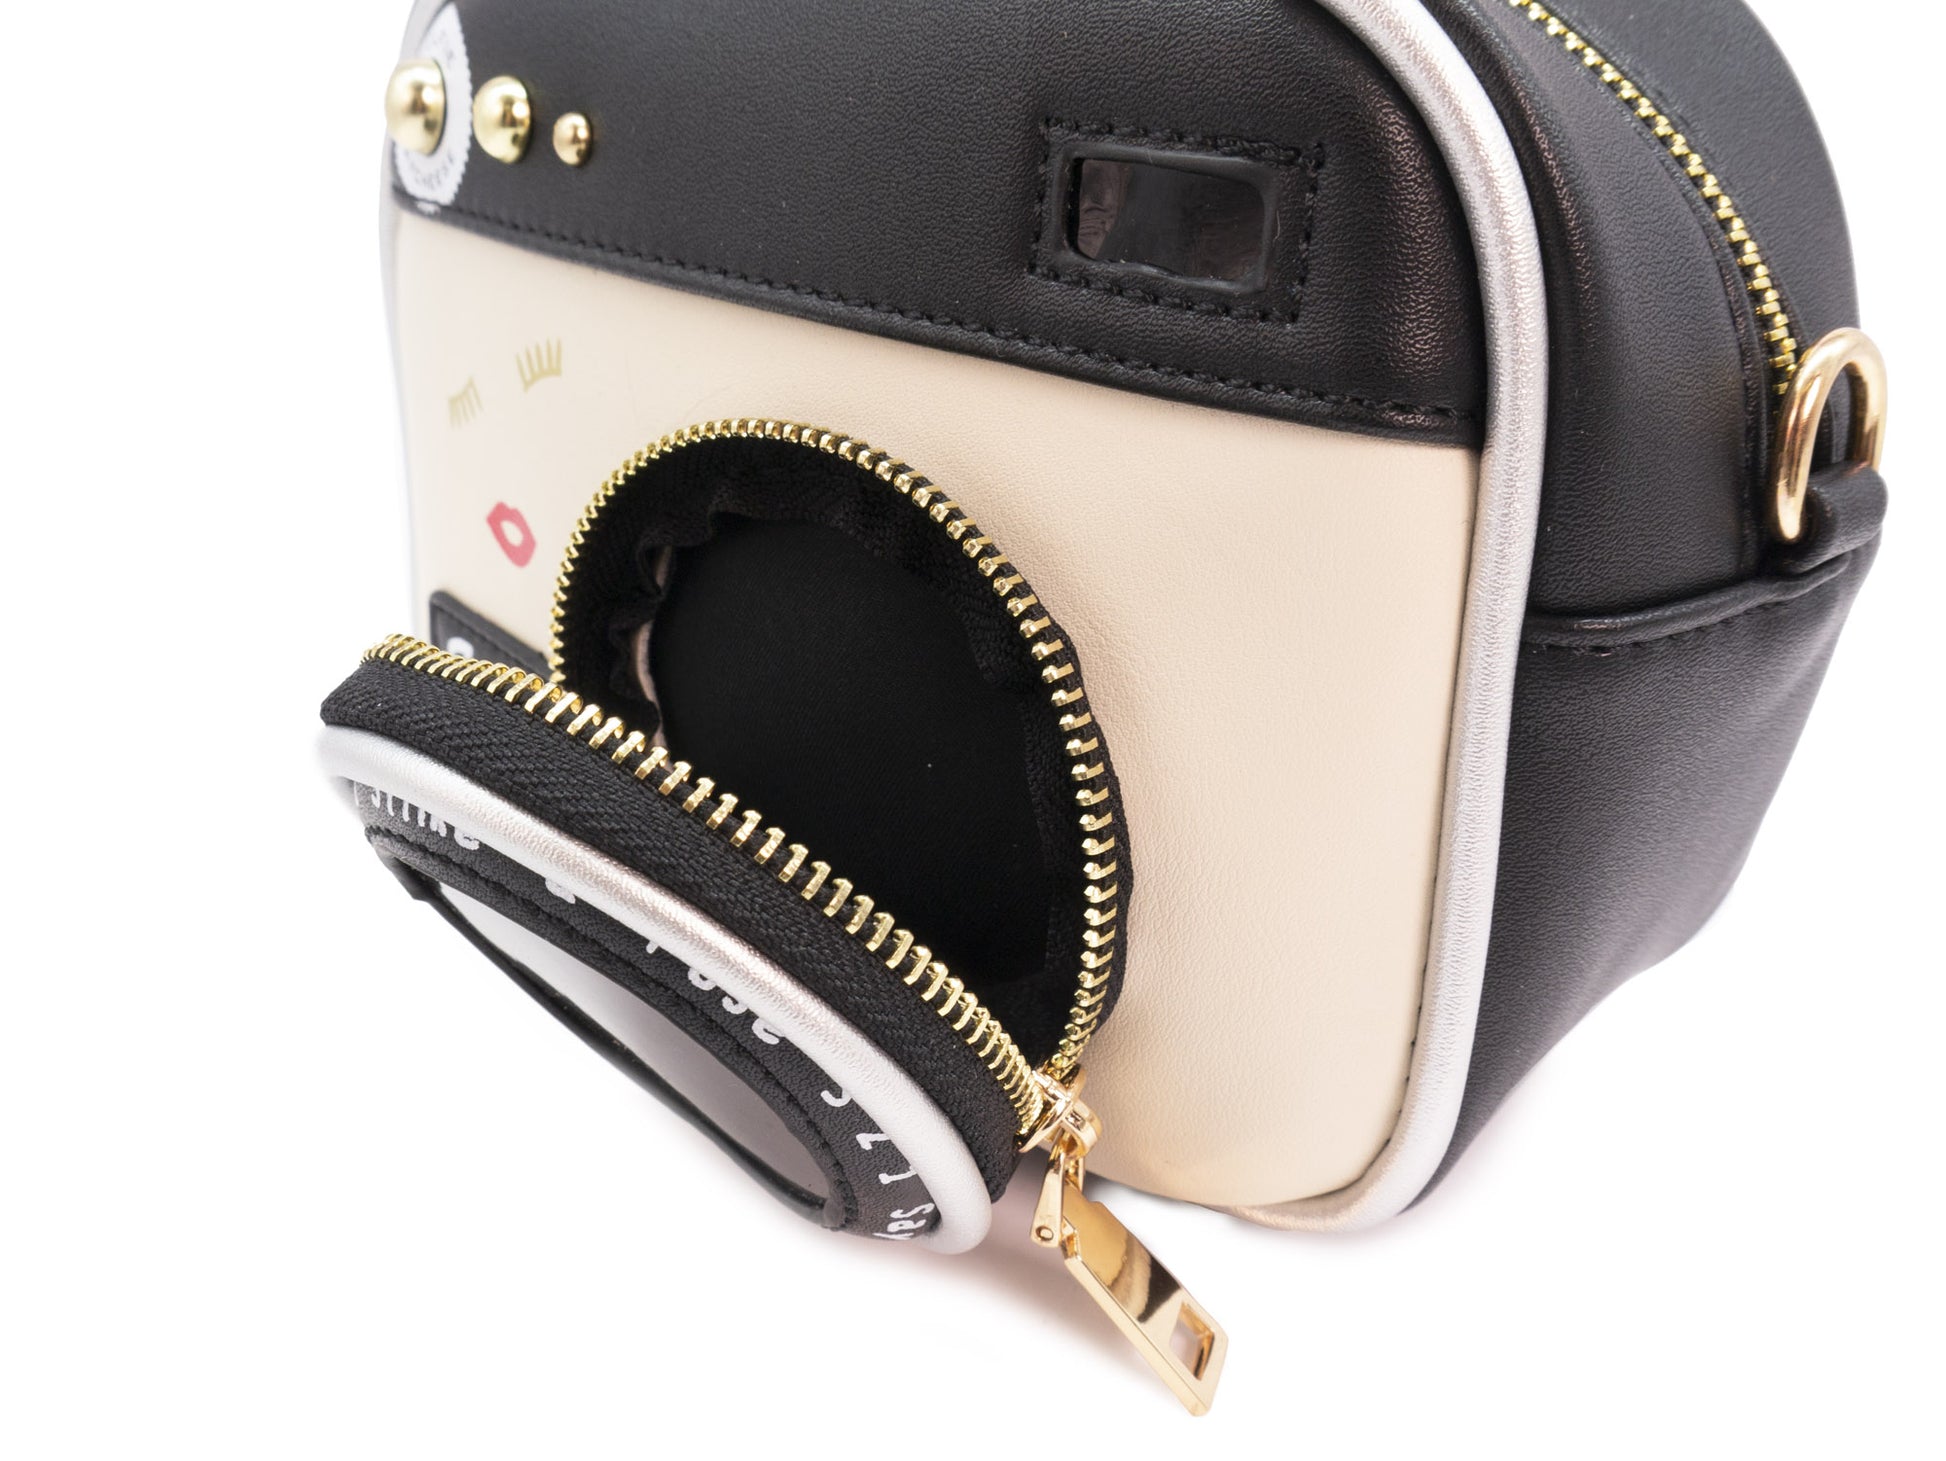 Flashy Camera Handbag - Bewaltz